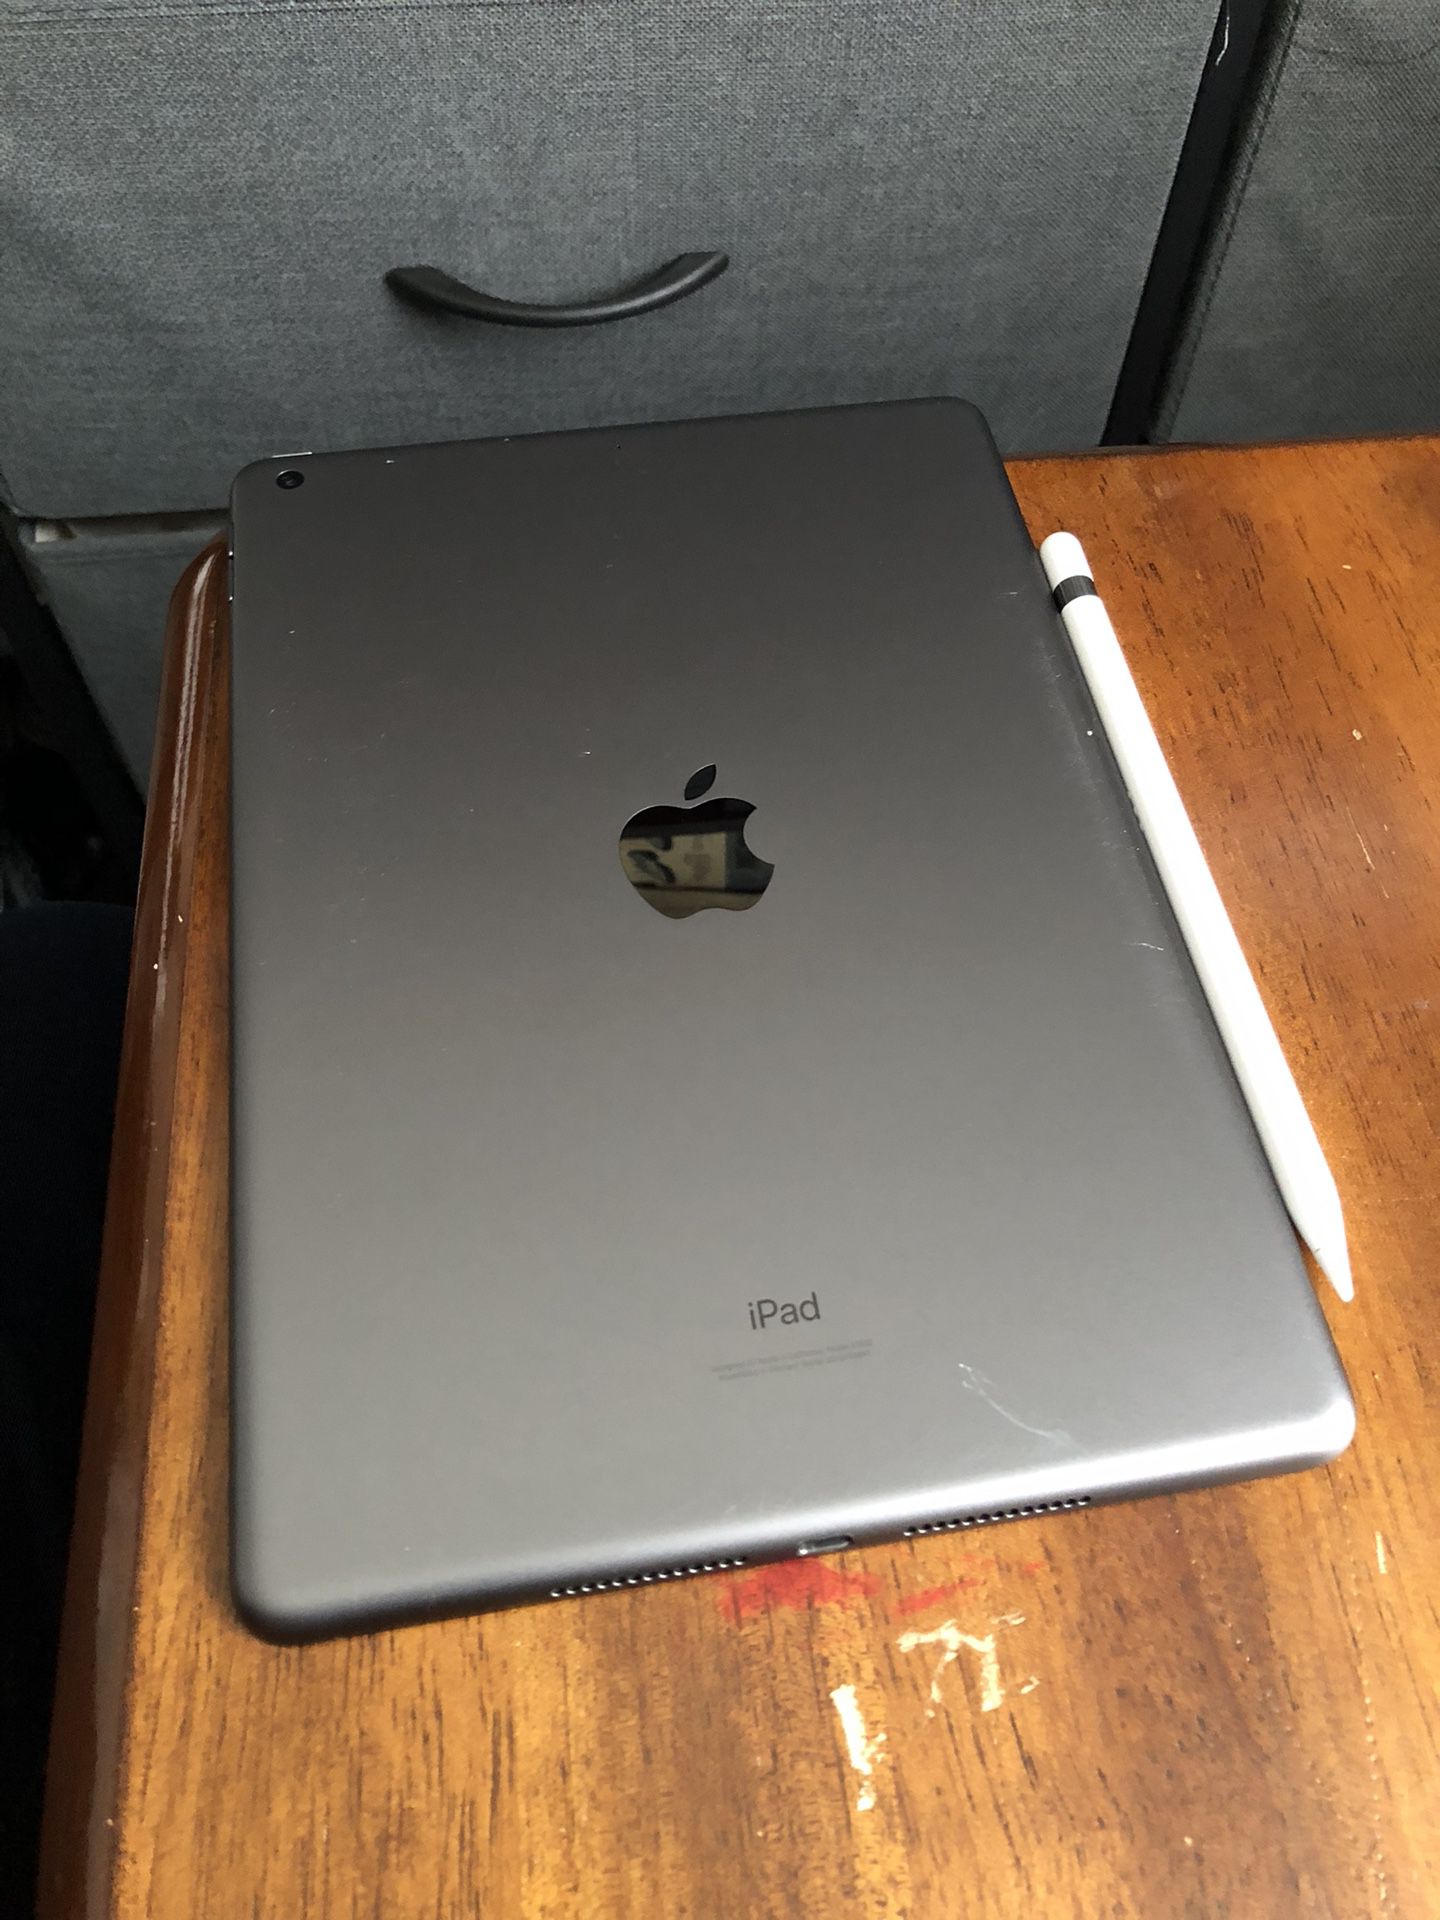 	Apple - 10.2-Inch iPad with Wi-Fi - 64GB - Space Gray